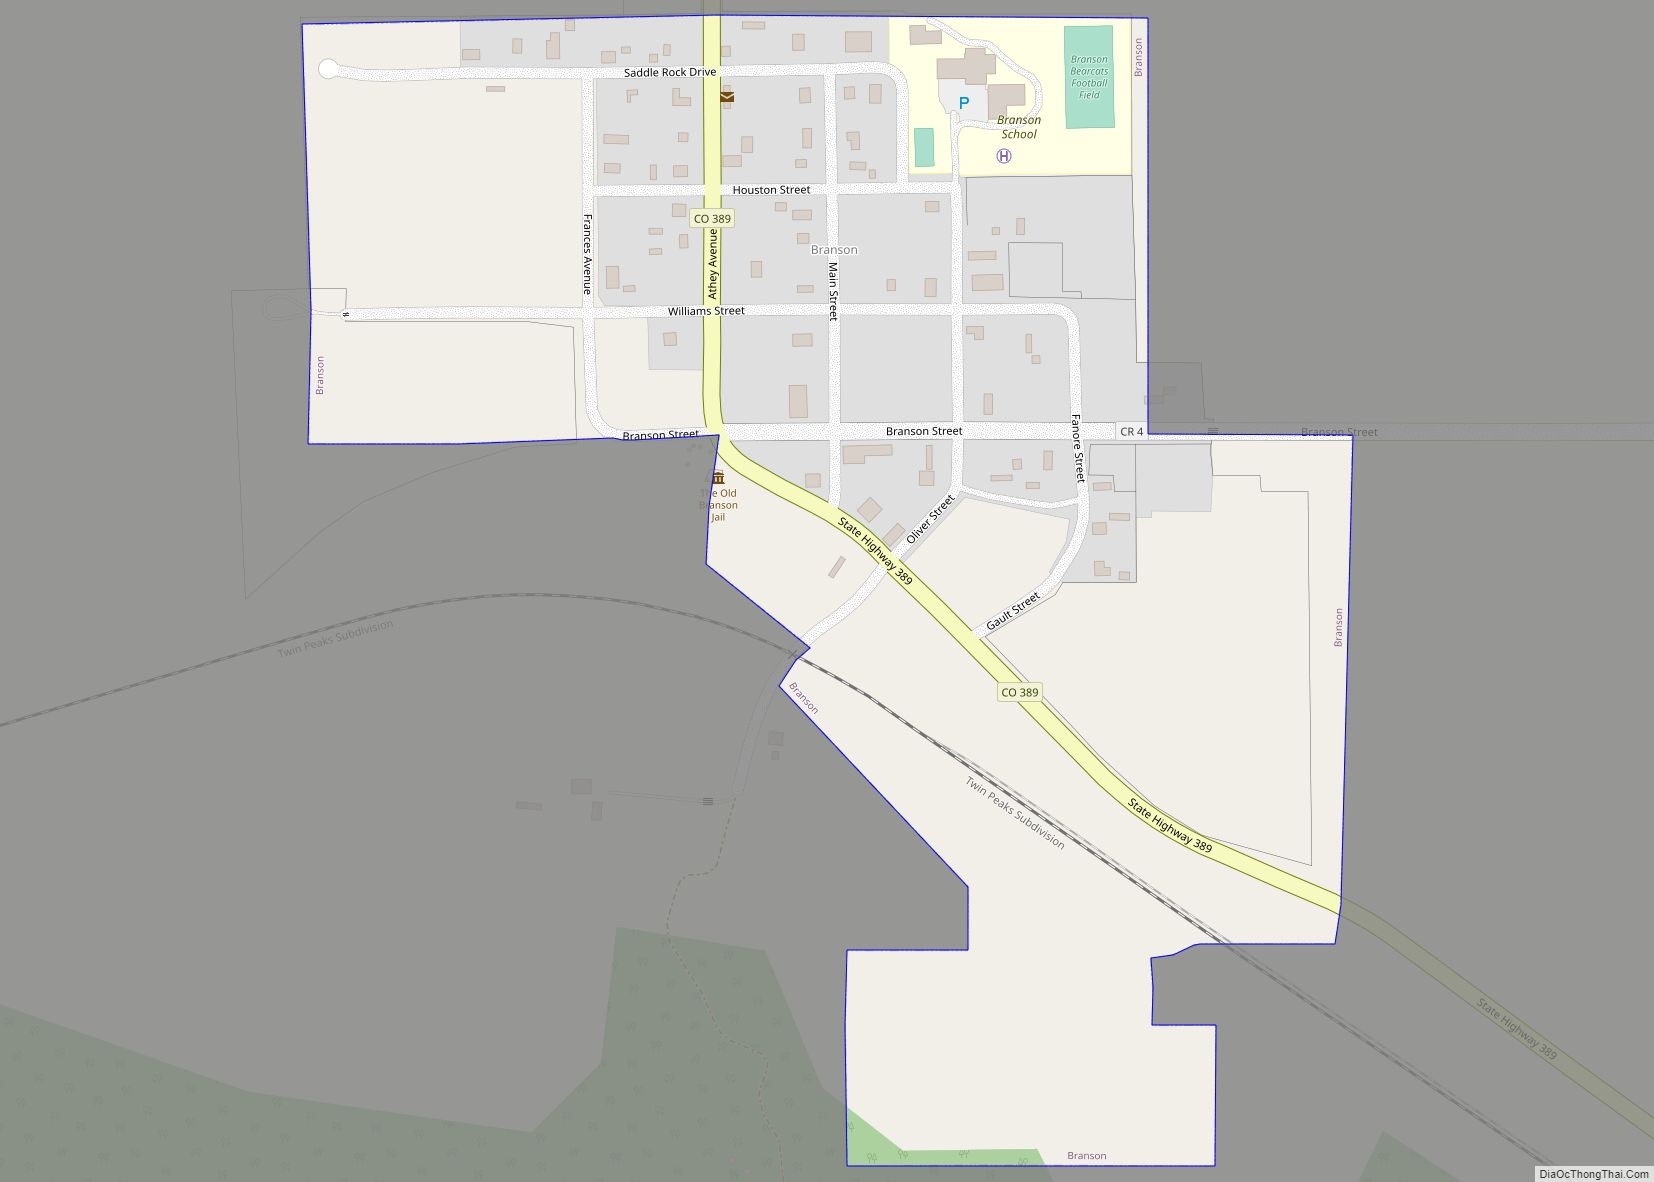 Map of Branson city